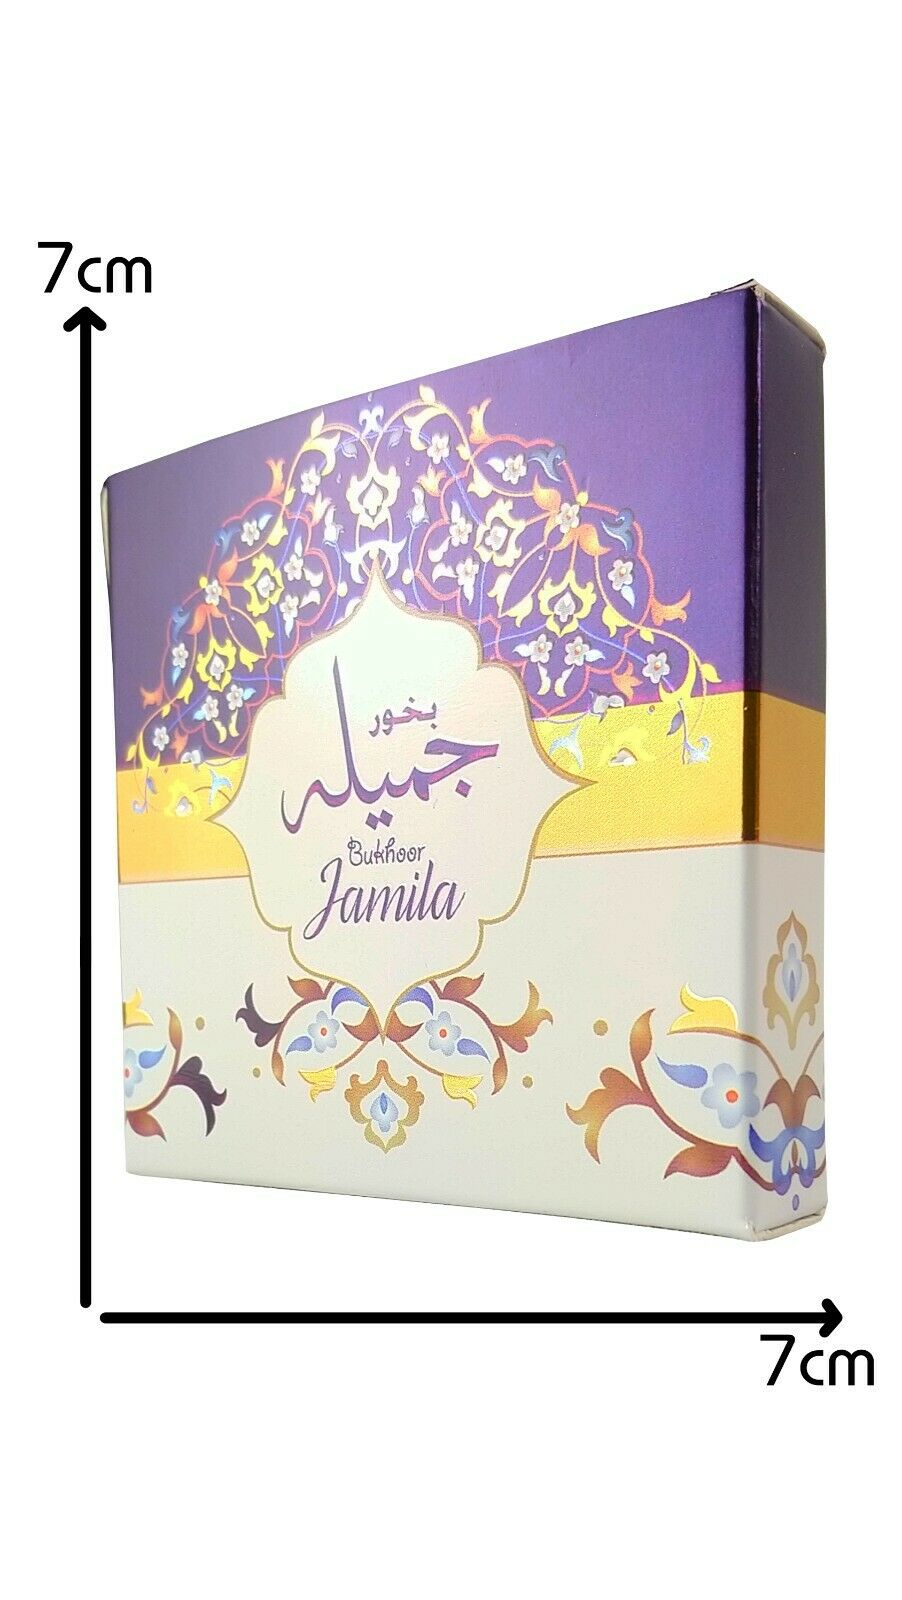 My Perfumes Jamila Bakhoor 40g